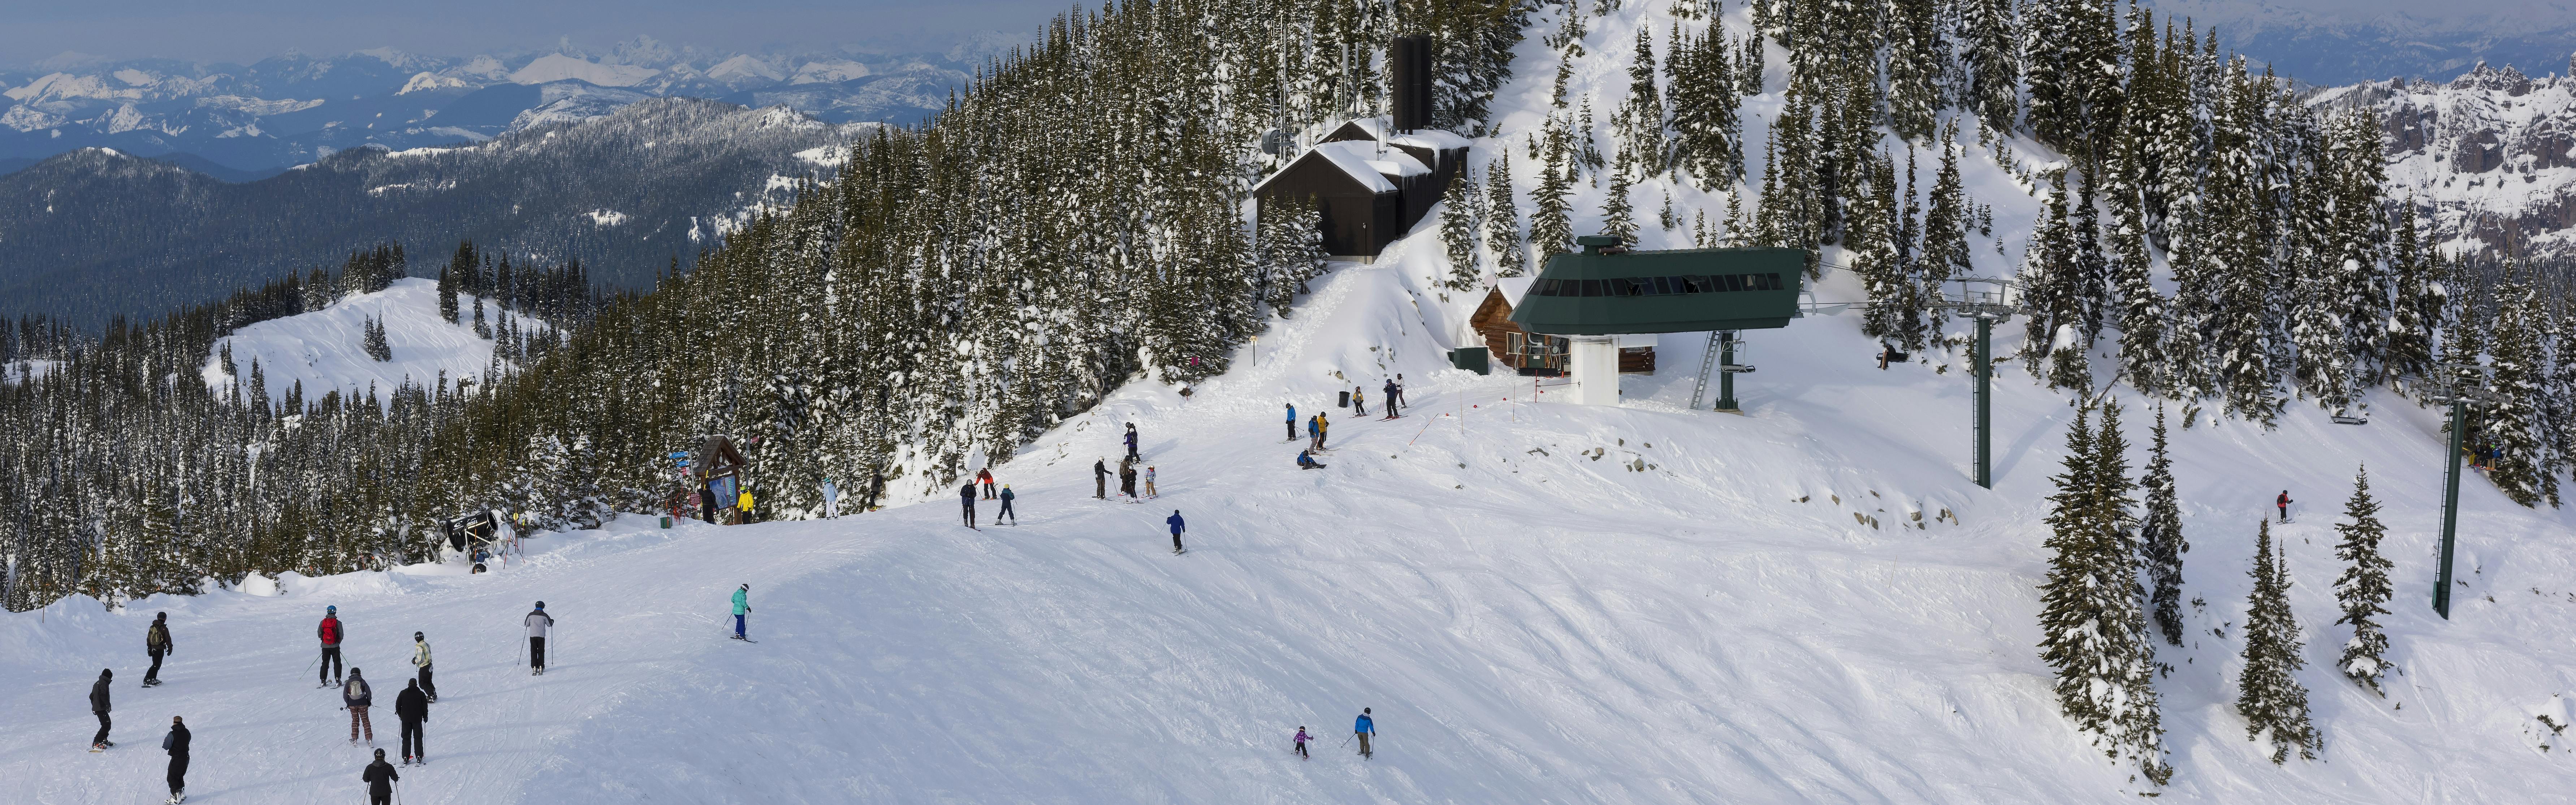 Skiers at the top of a ski lift at Crystal Mountain ski resort. 